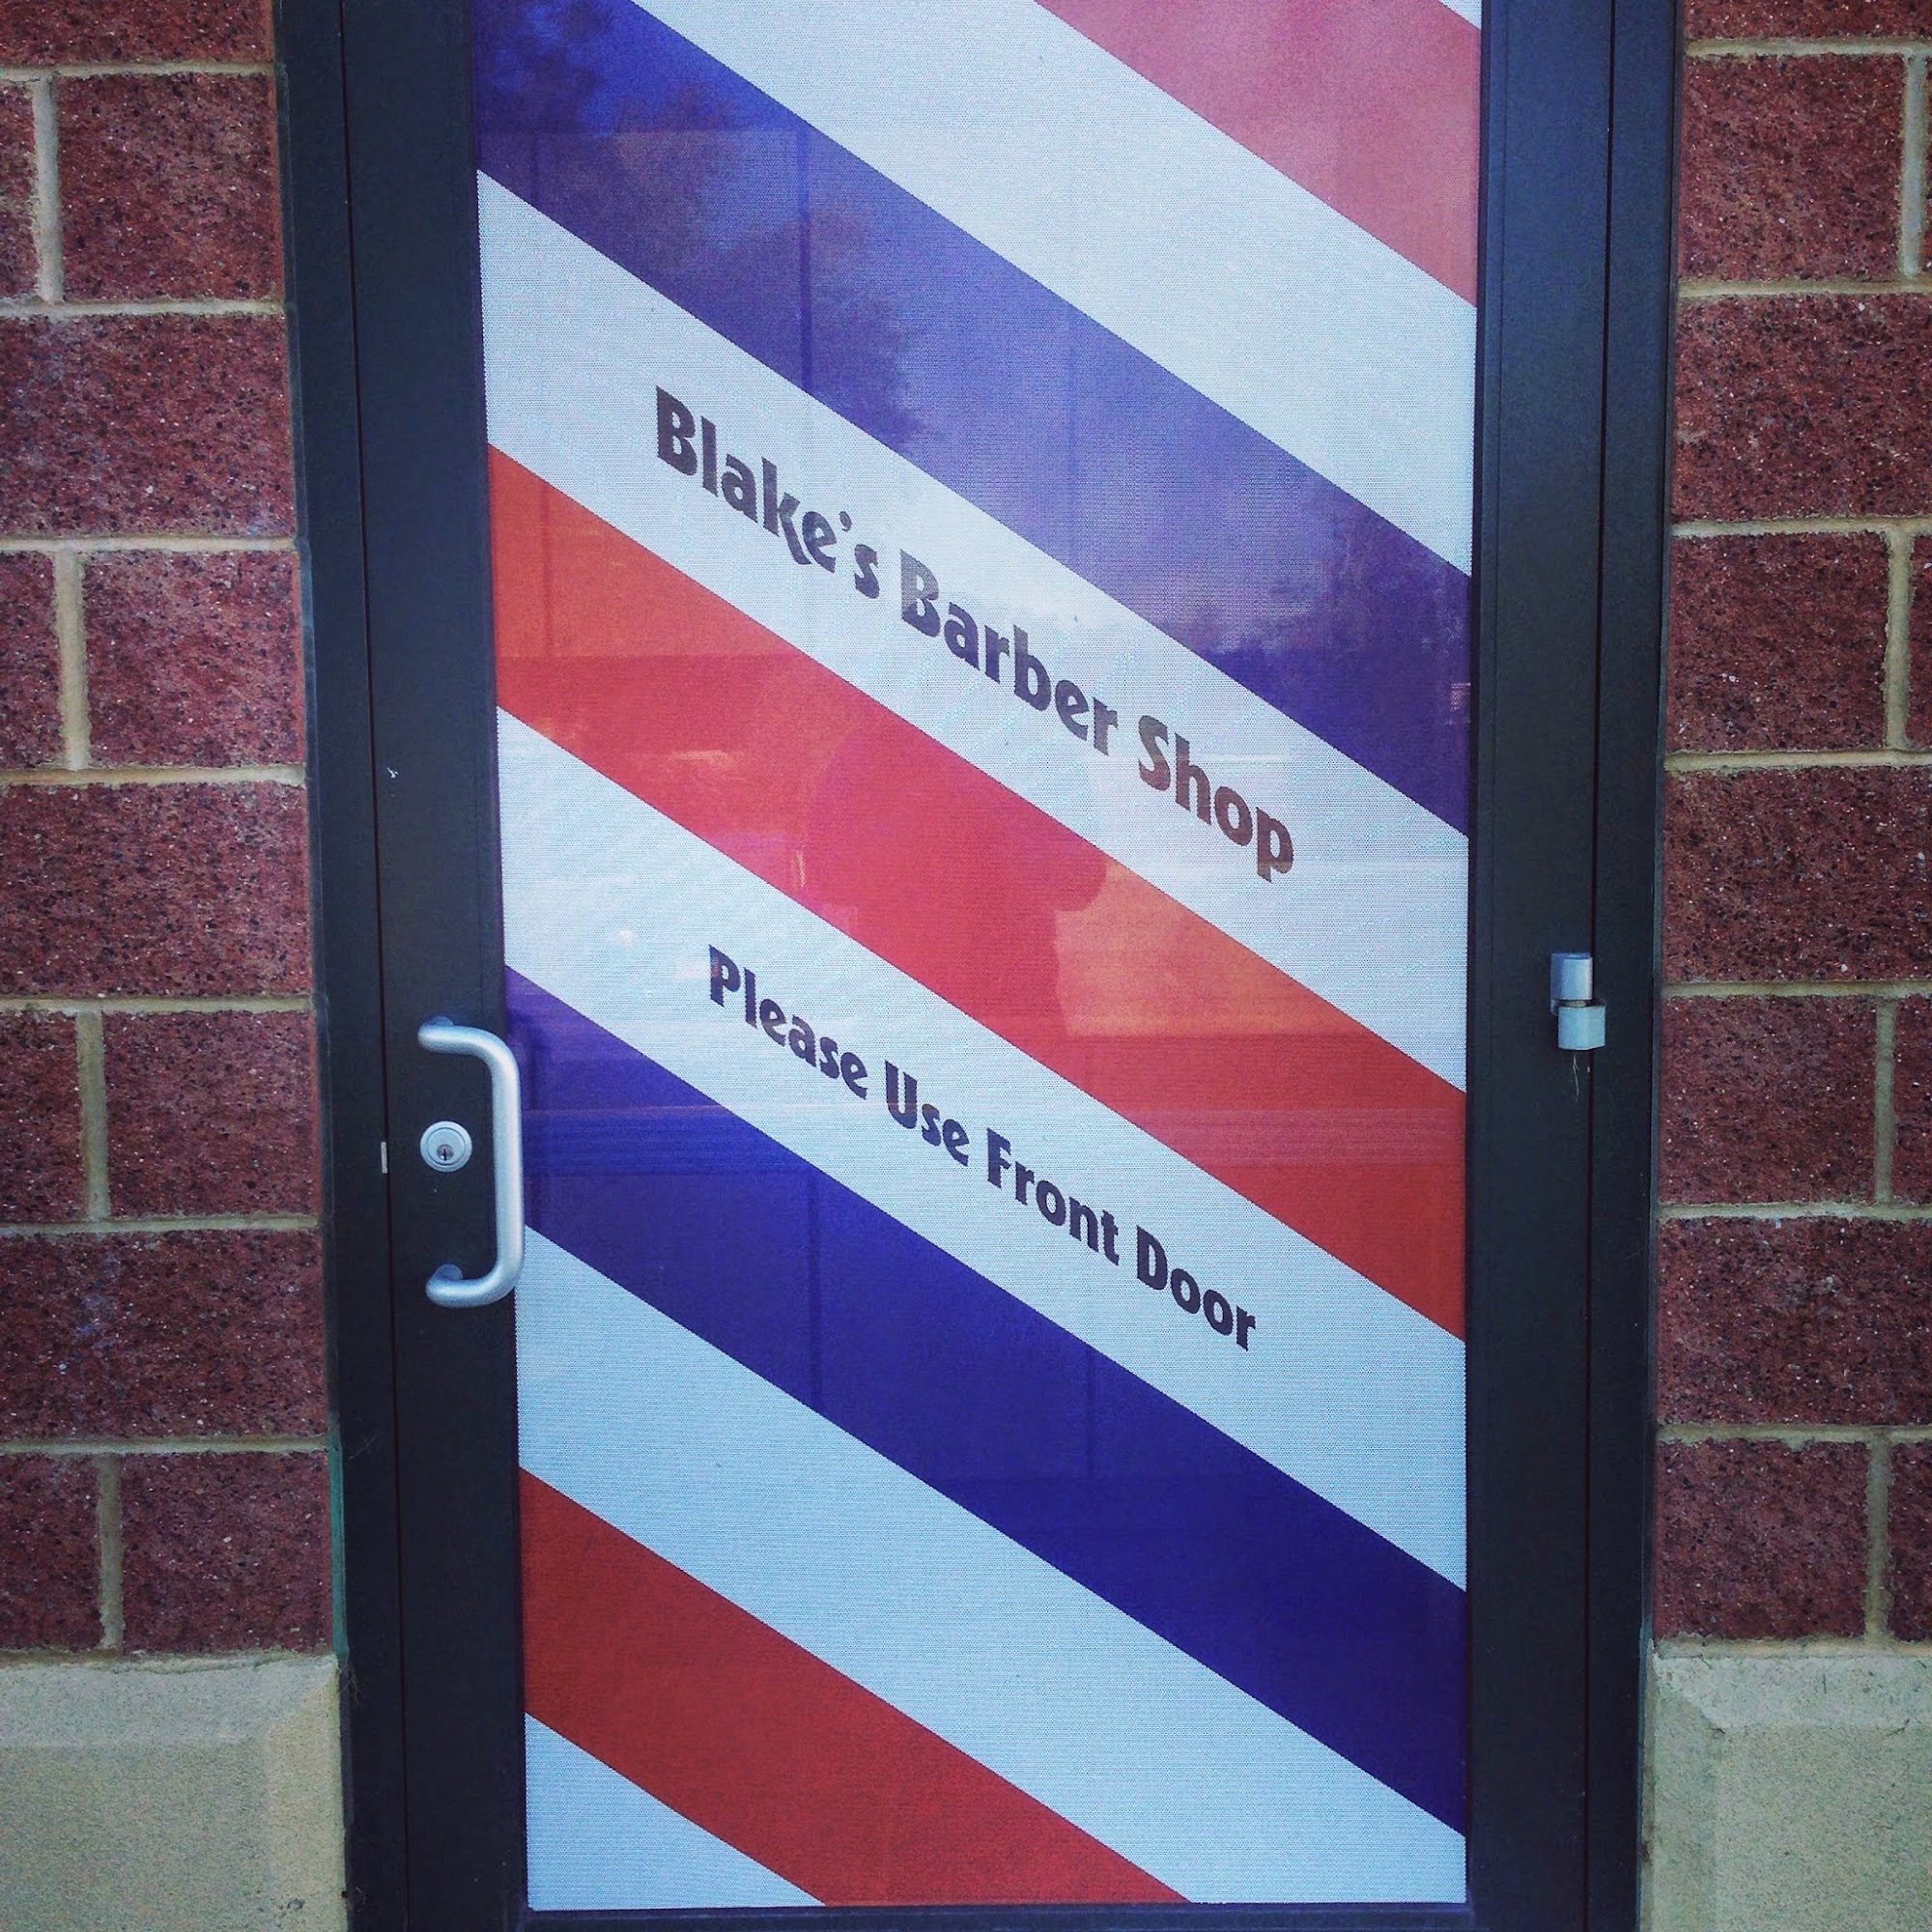 Blake's Barbershop